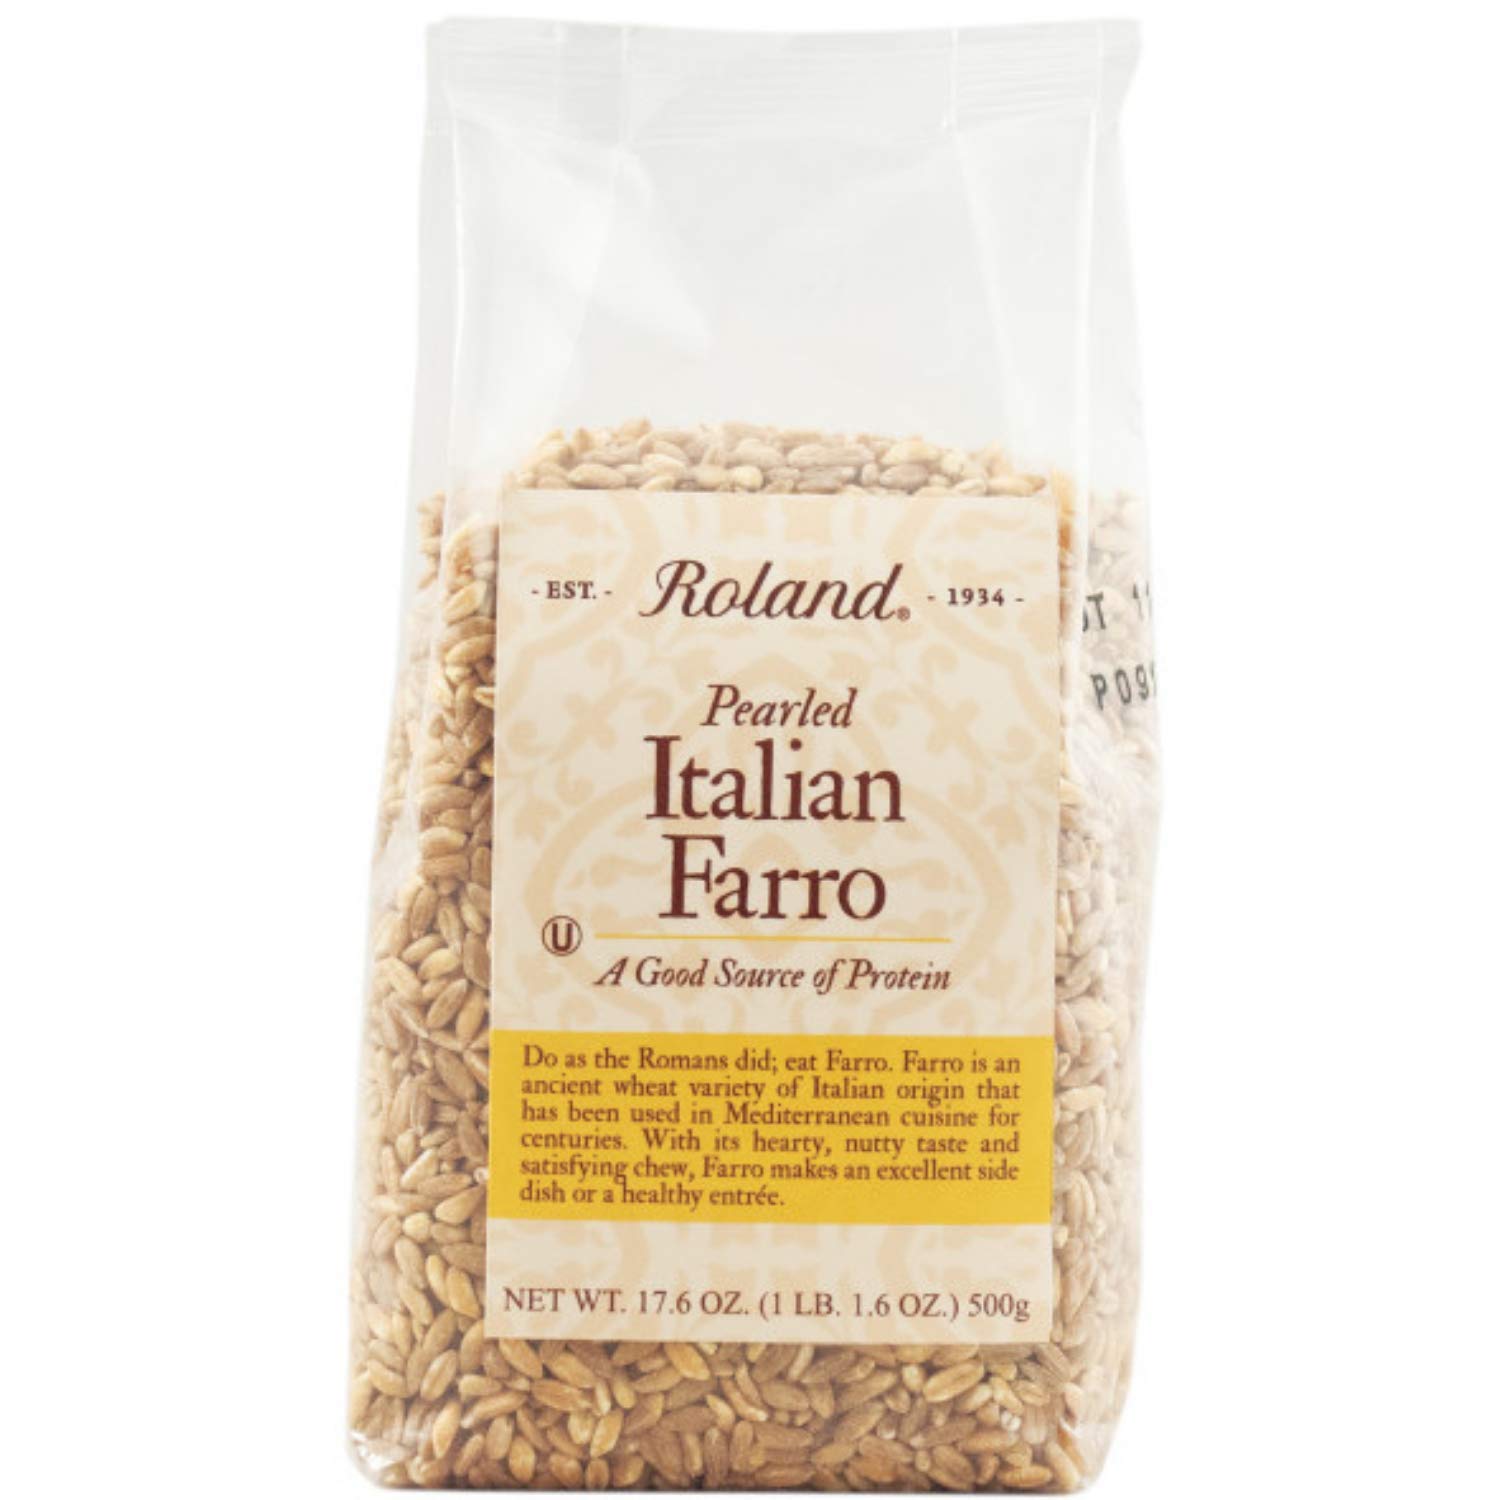 Italian Farro